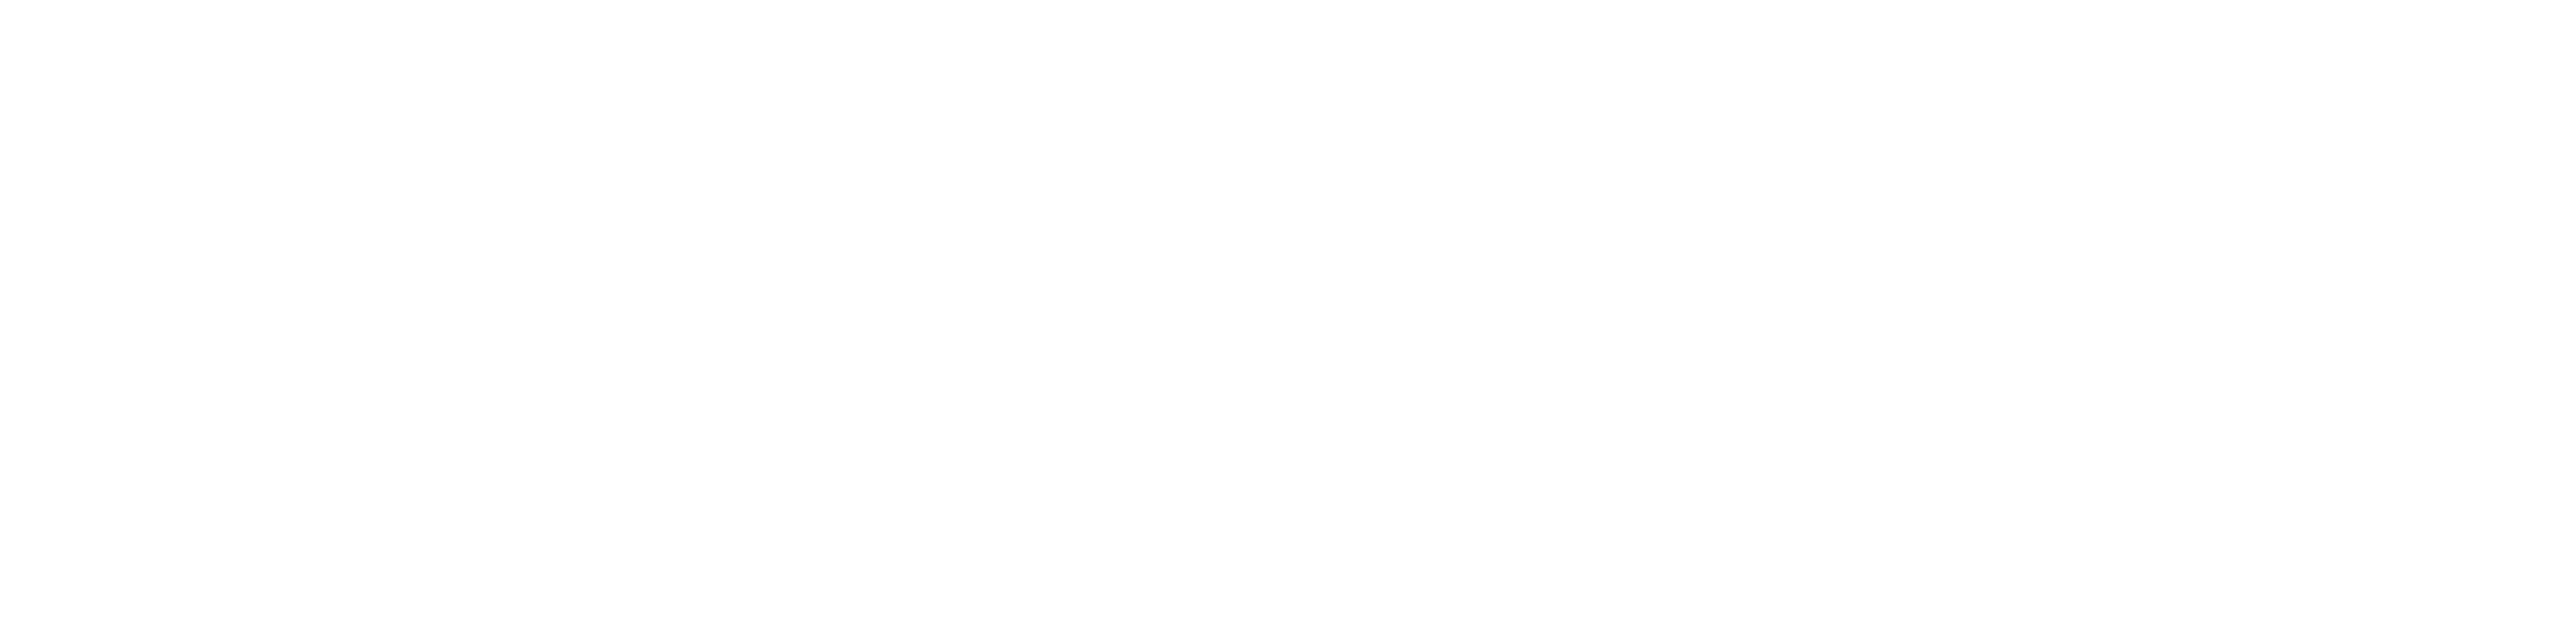 aws marketplace logo